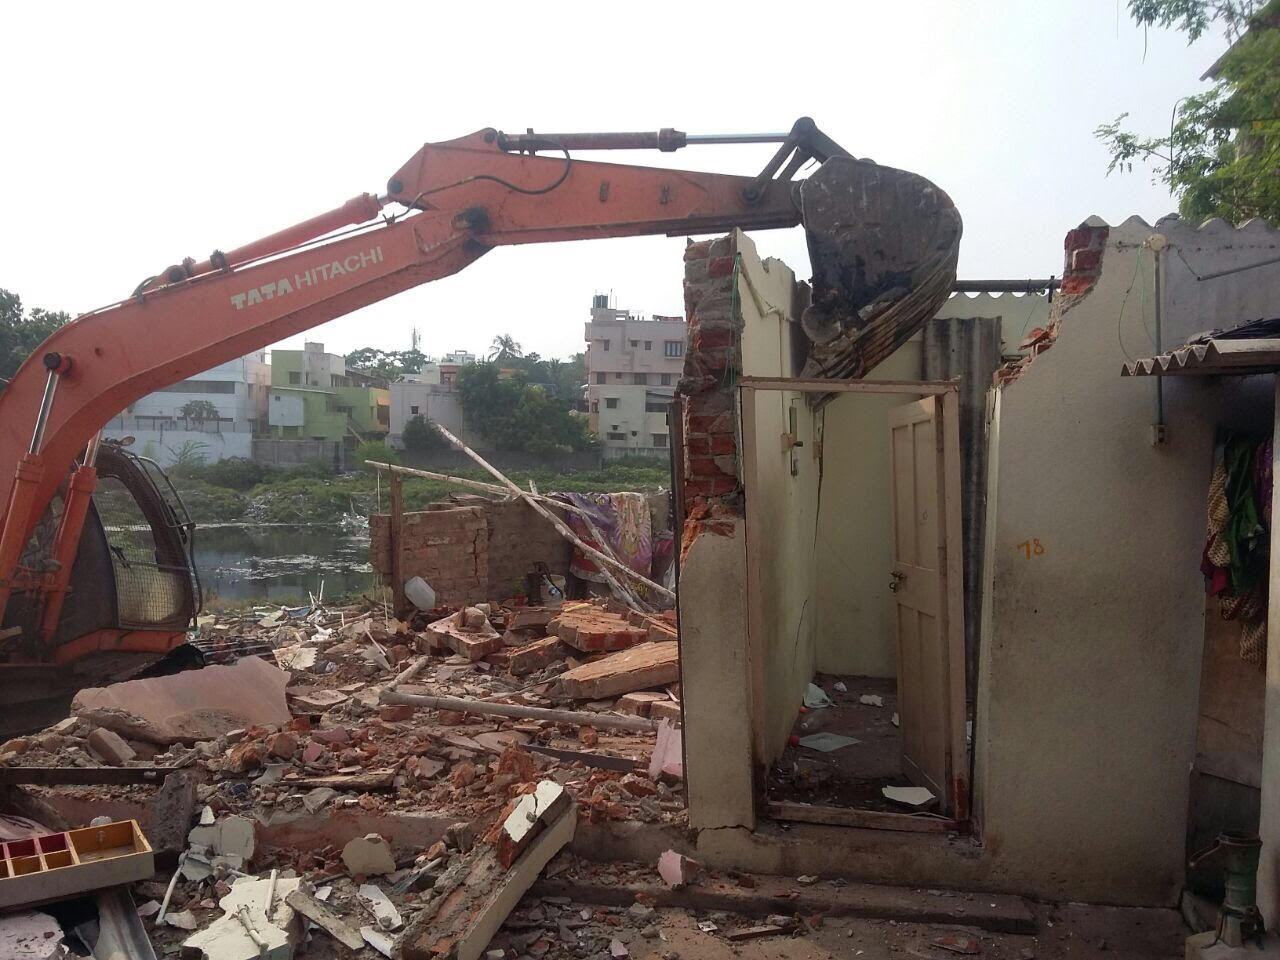 Haryana govt defends Nuh demolition spree, says no ethnic cleansing